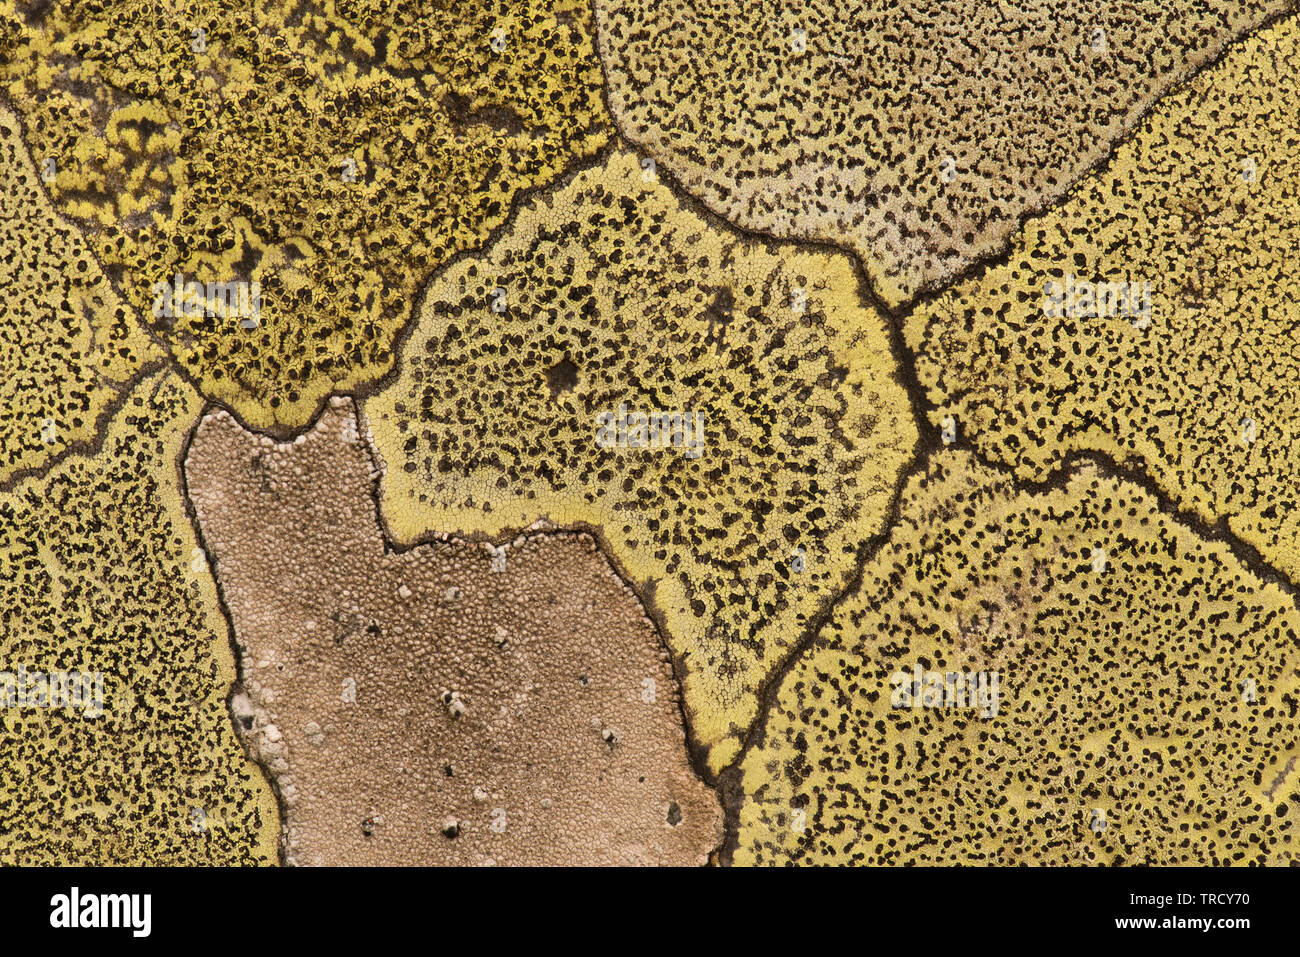 Lichen of the genus rhizocarpon. Rhizocarpon geographicum Stock Photo